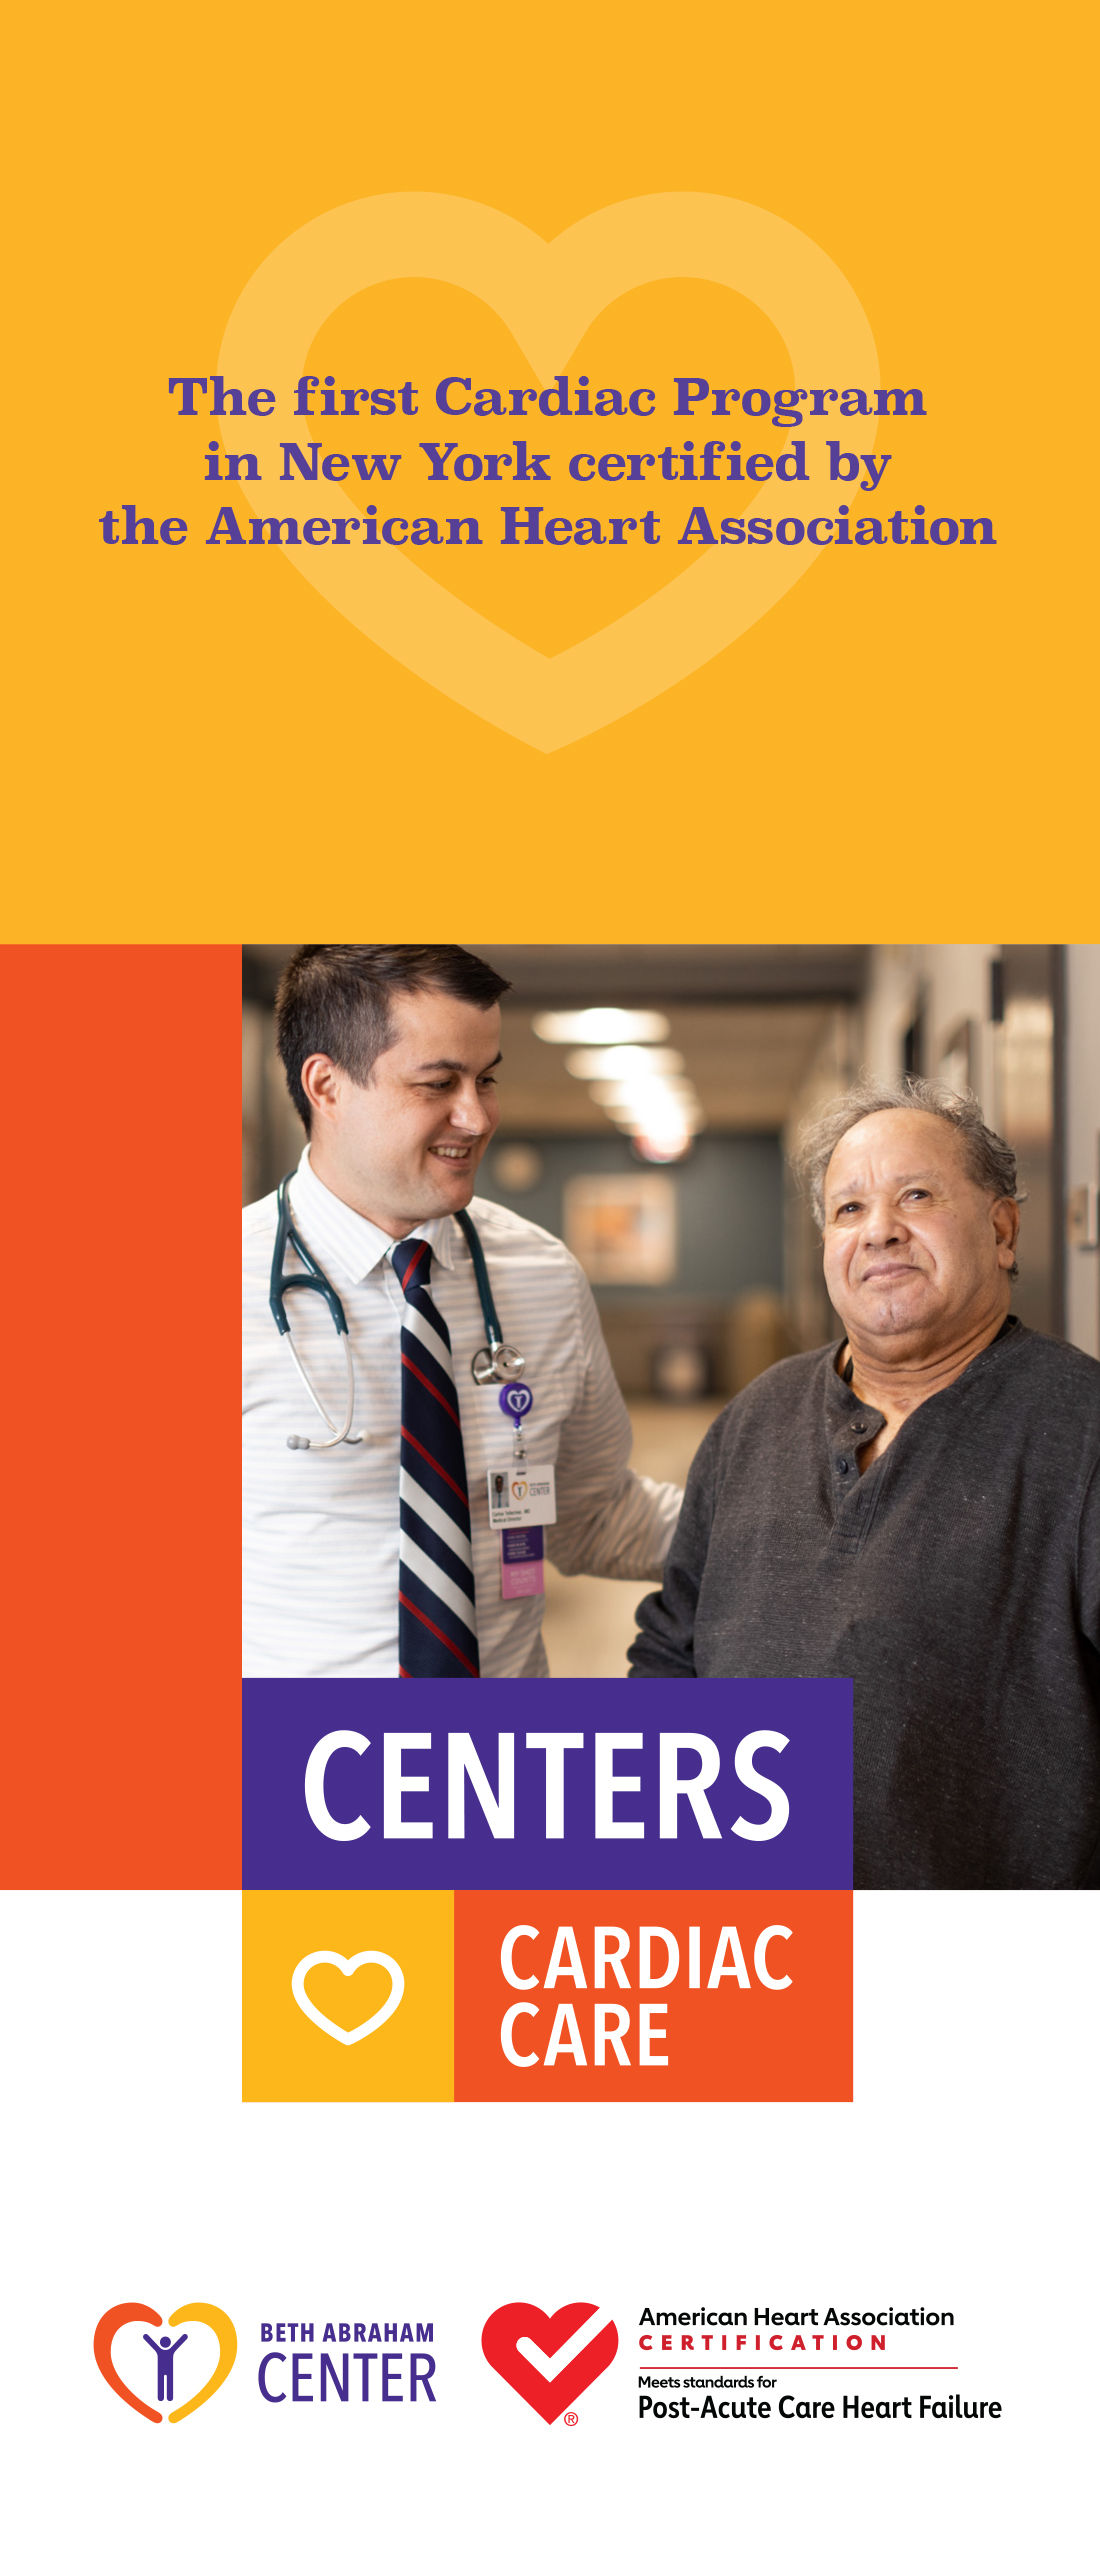 Centers Cardiac Care